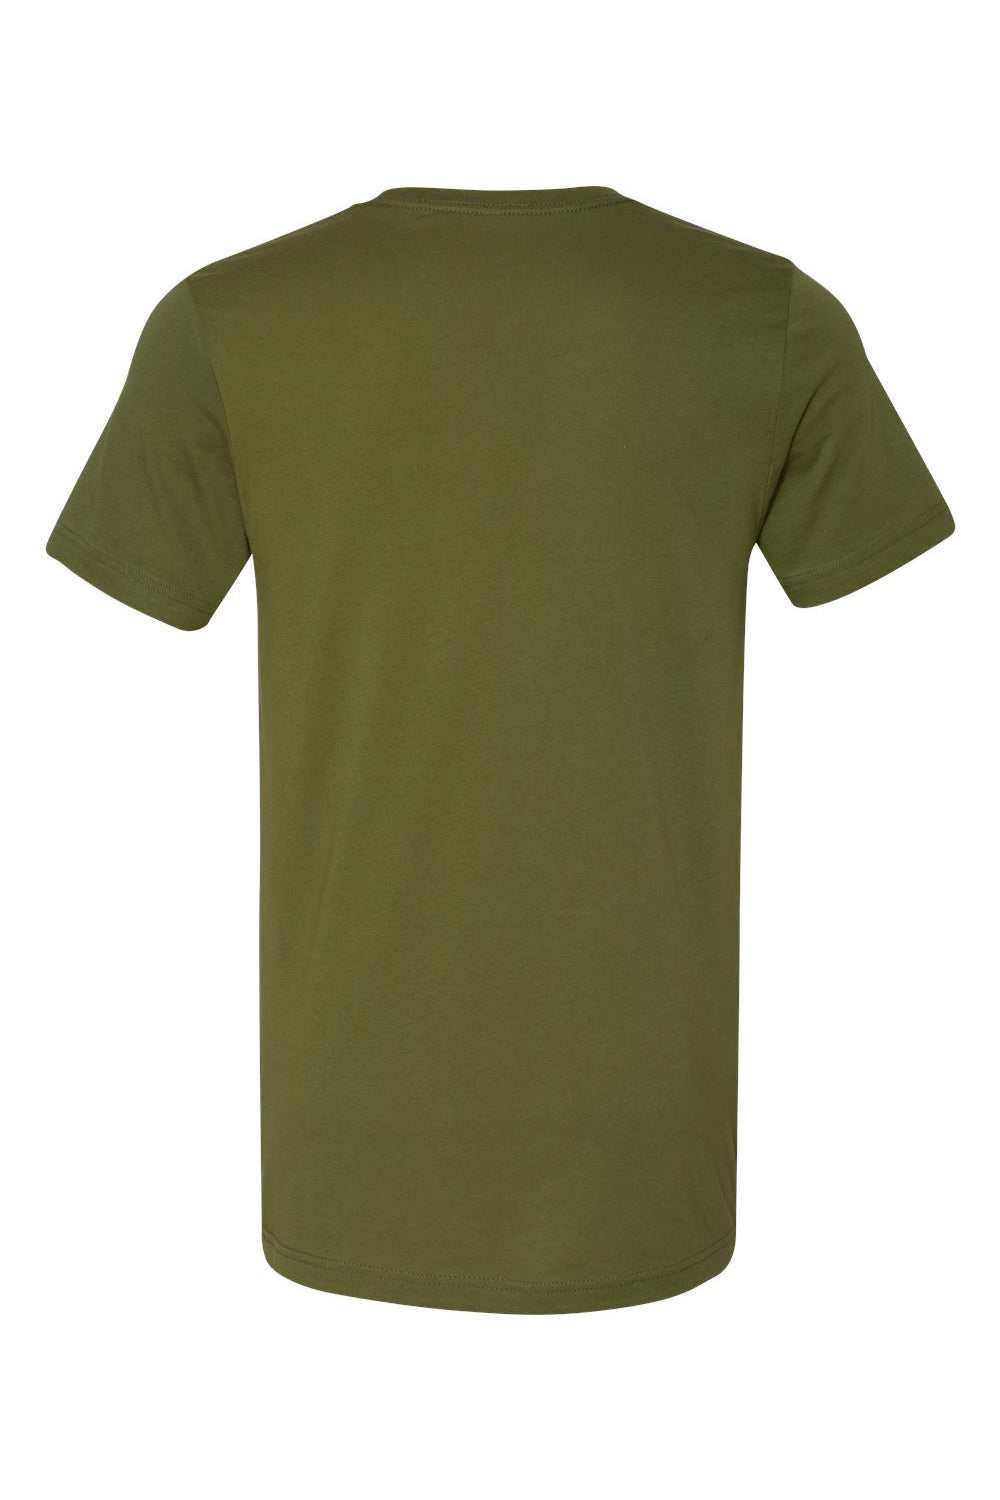 Bella + Canvas BC3001/3001C Mens Jersey Short Sleeve Crewneck T-Shirt Olive Green Flat Back